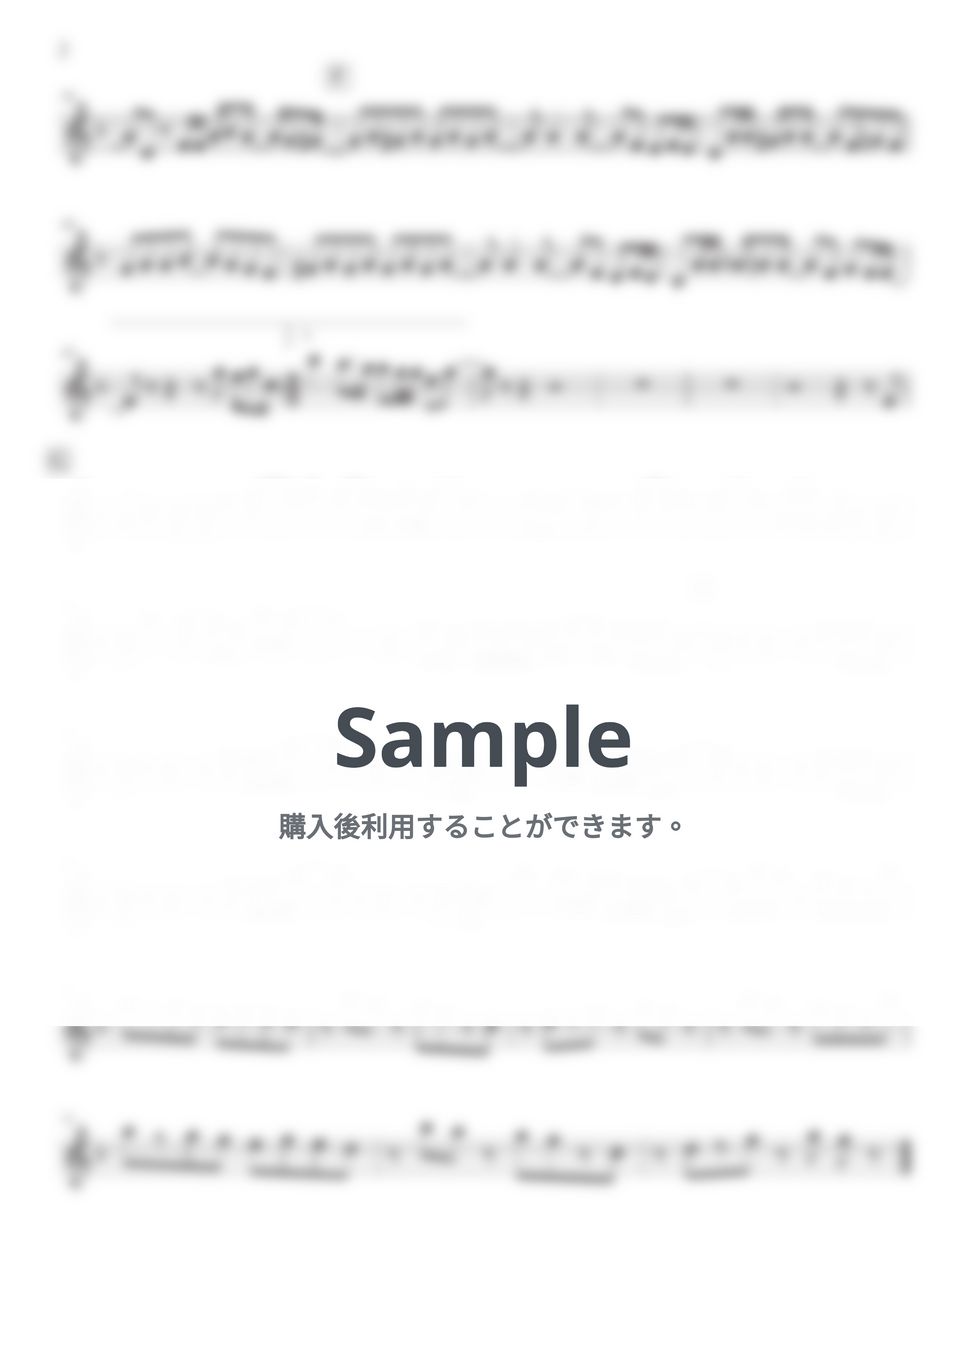 milet×Aimer×幾田りら - おもかげ(PRODUCED BY VAUNDY) (Eb) by Tomoya